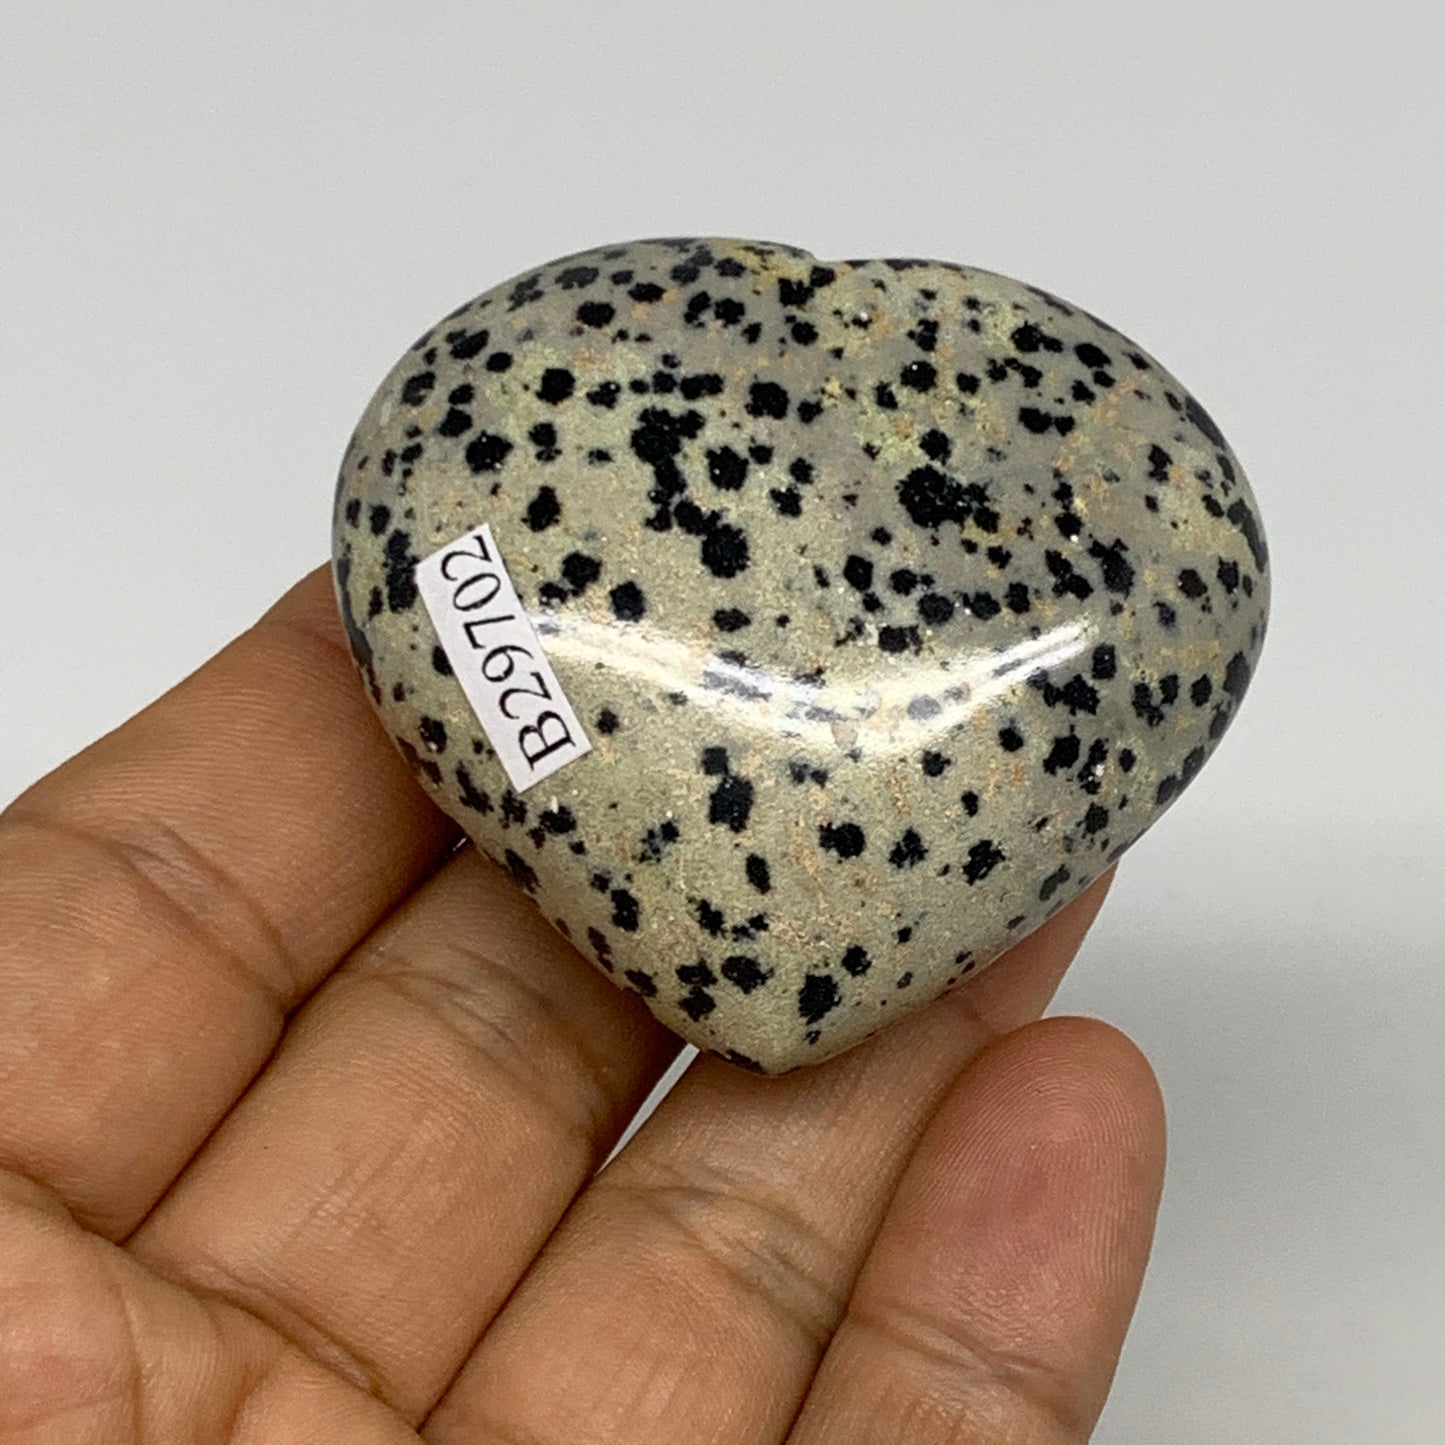 79.1g, 1.9"x2.1"x0.9" Dalmatian Jasper Heart Polished Healing Home Decor, B29702